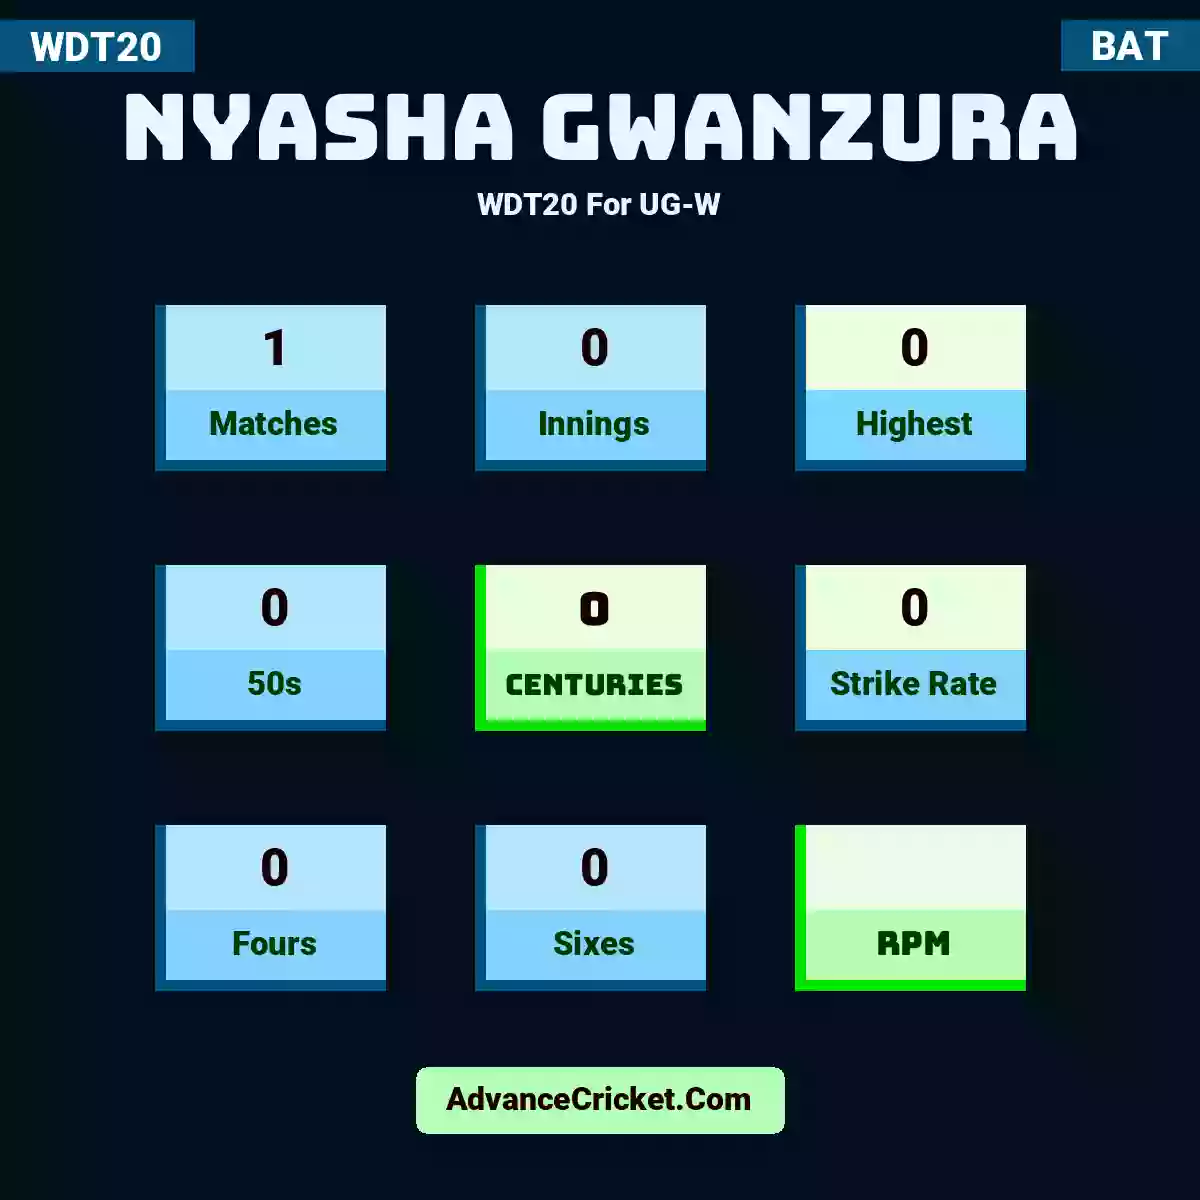 Nyasha Gwanzura WDT20  For UG-W, Nyasha Gwanzura played 1 matches, scored 0 runs as highest, 0 half-centuries, and 0 centuries, with a strike rate of 0. N.Gwanzura hit 0 fours and 0 sixes.